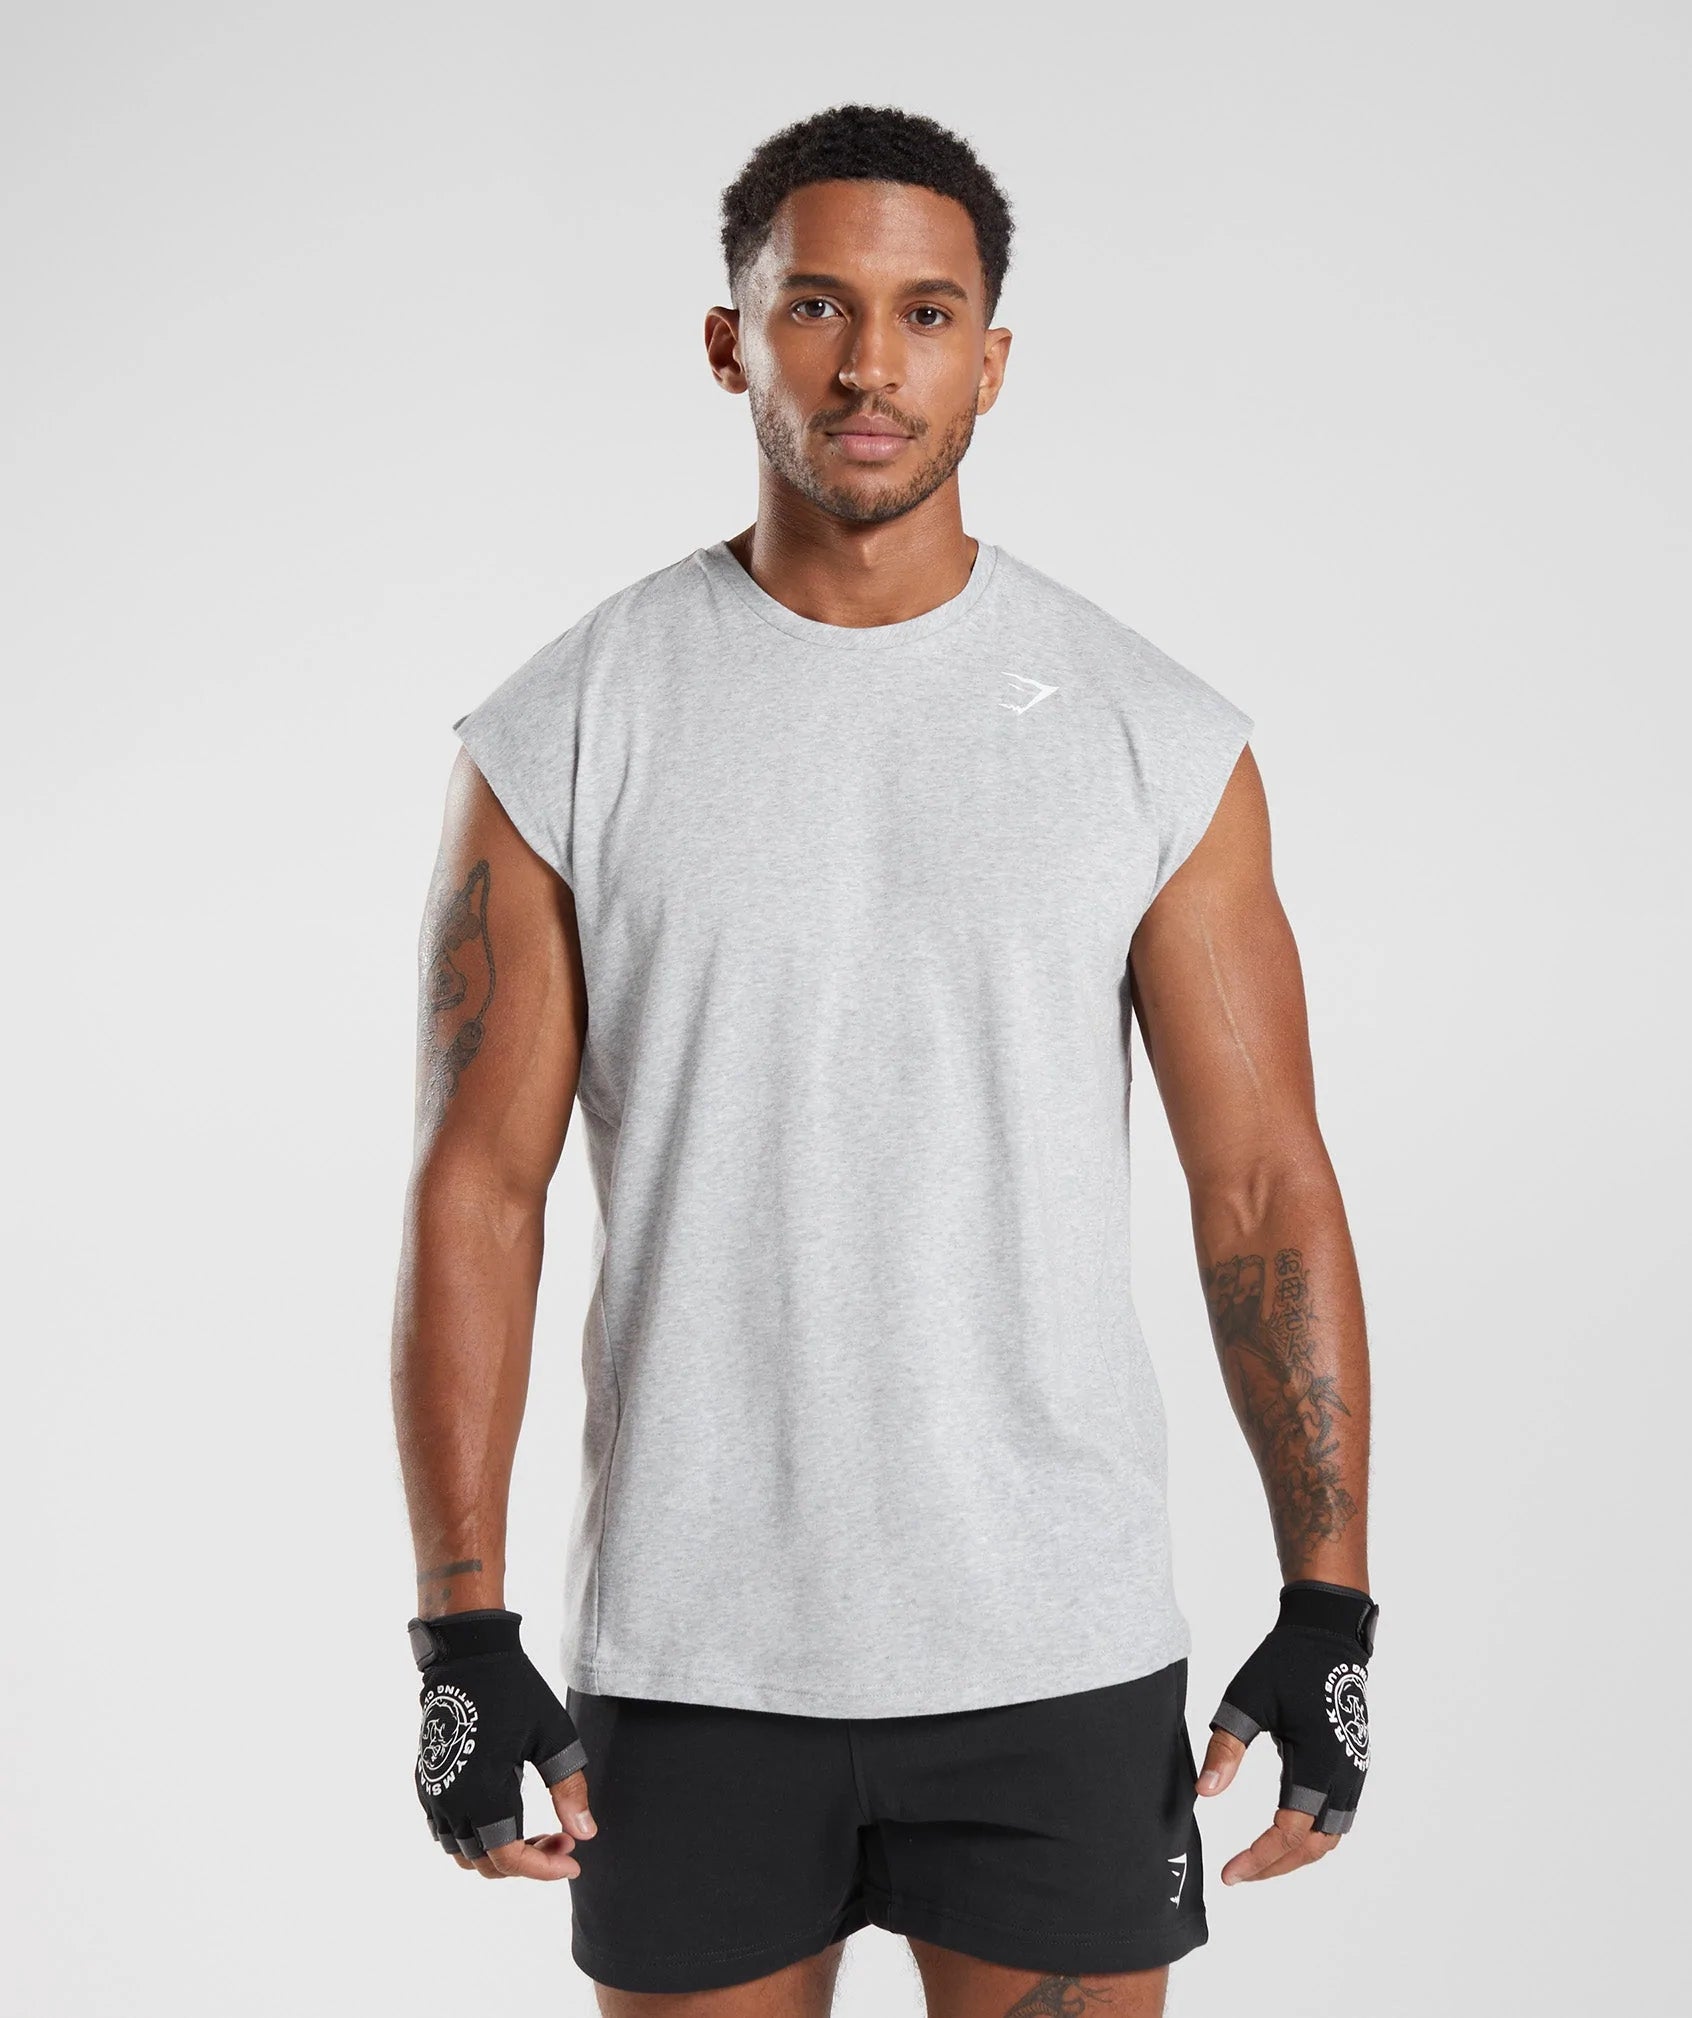 New 2014 fashion cotton gymshark sleeveless shirts tank top men Fitness  shirt mens singlet sport Bodybuilding Plus size gym vest - AliExpress